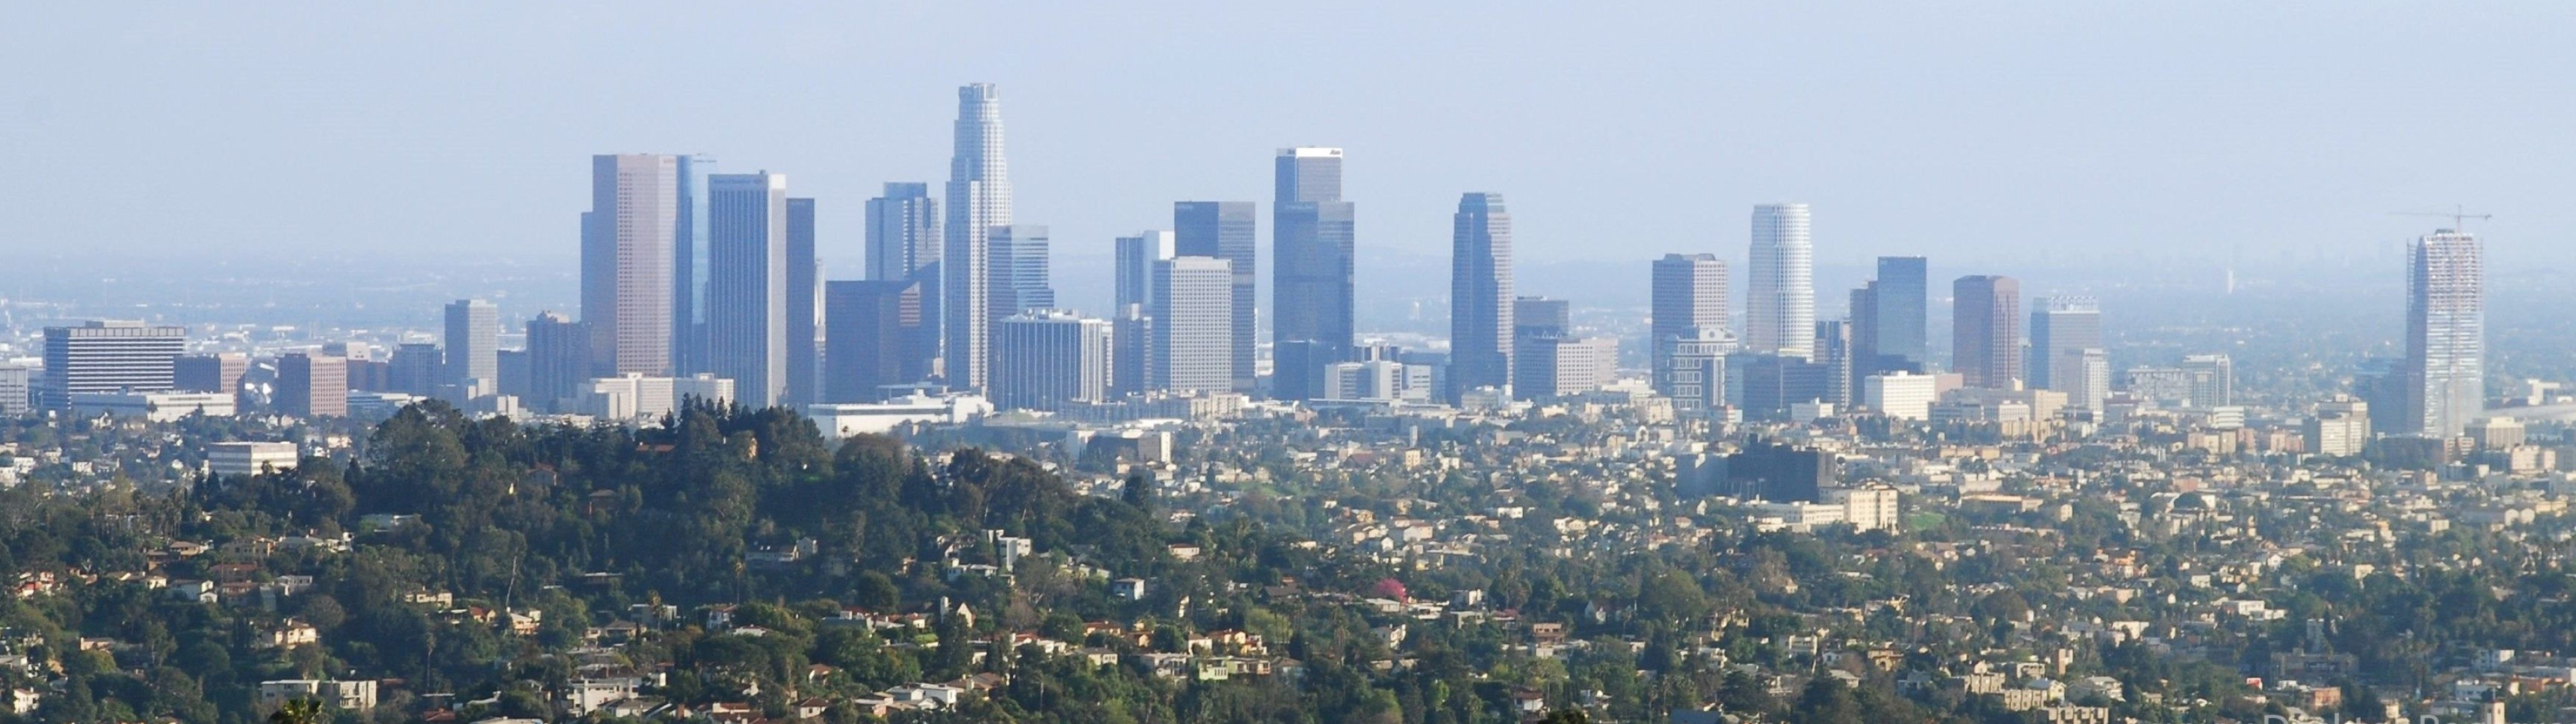 Los Angeles Skyline, Dual monitor wallpapers, Urban metropolis, Cityscape, 3840x1080 Dual Screen Desktop